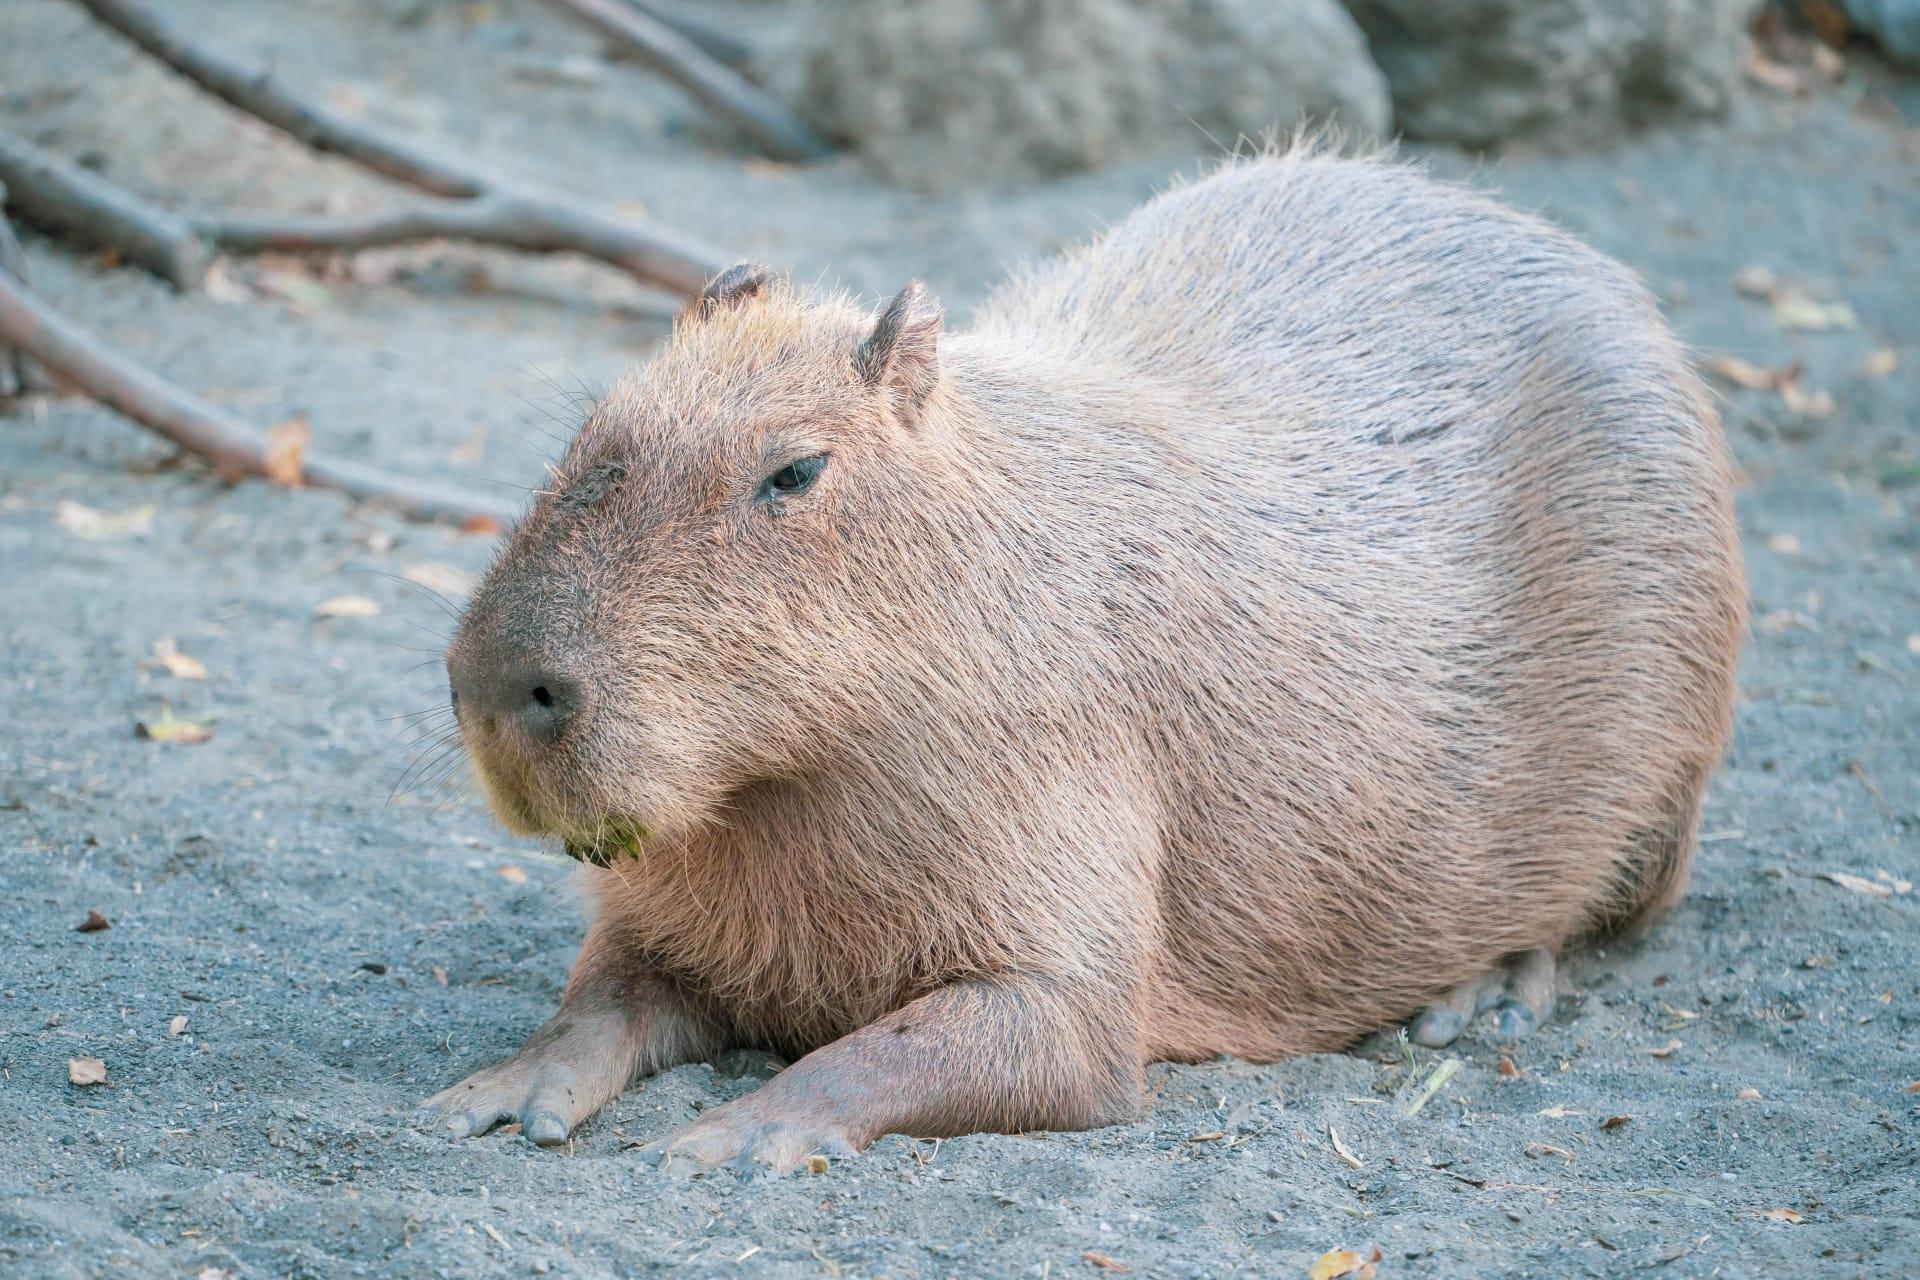 Capybara pictures